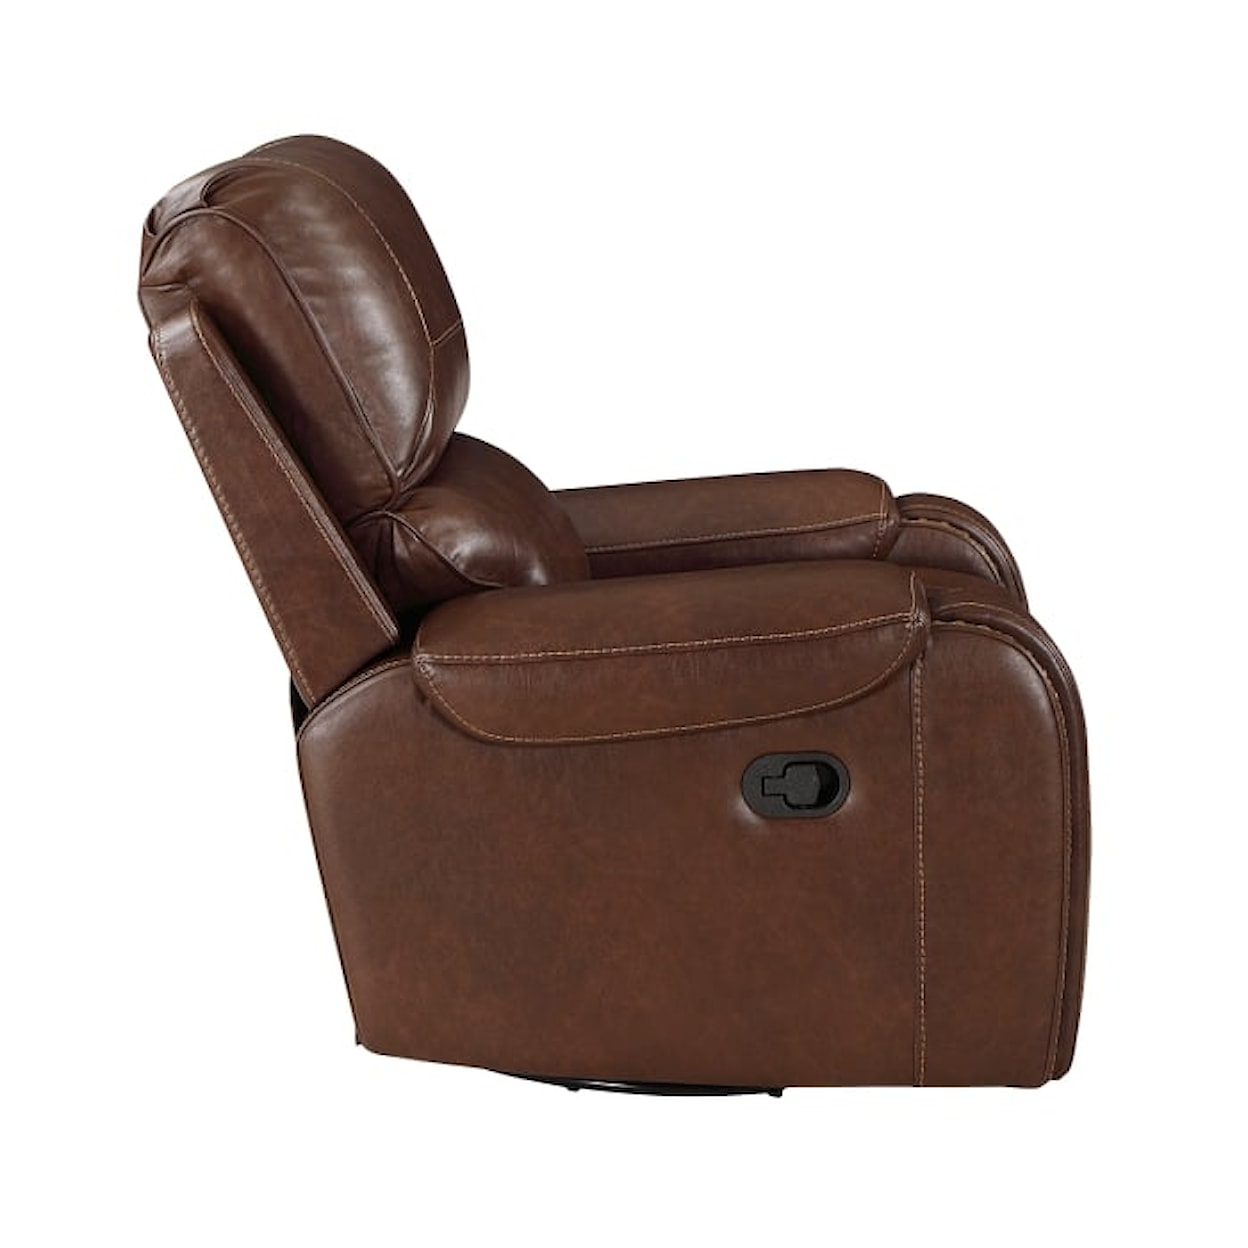 Homelegance Furniture Newnan Swivel Glider Reclining Chair